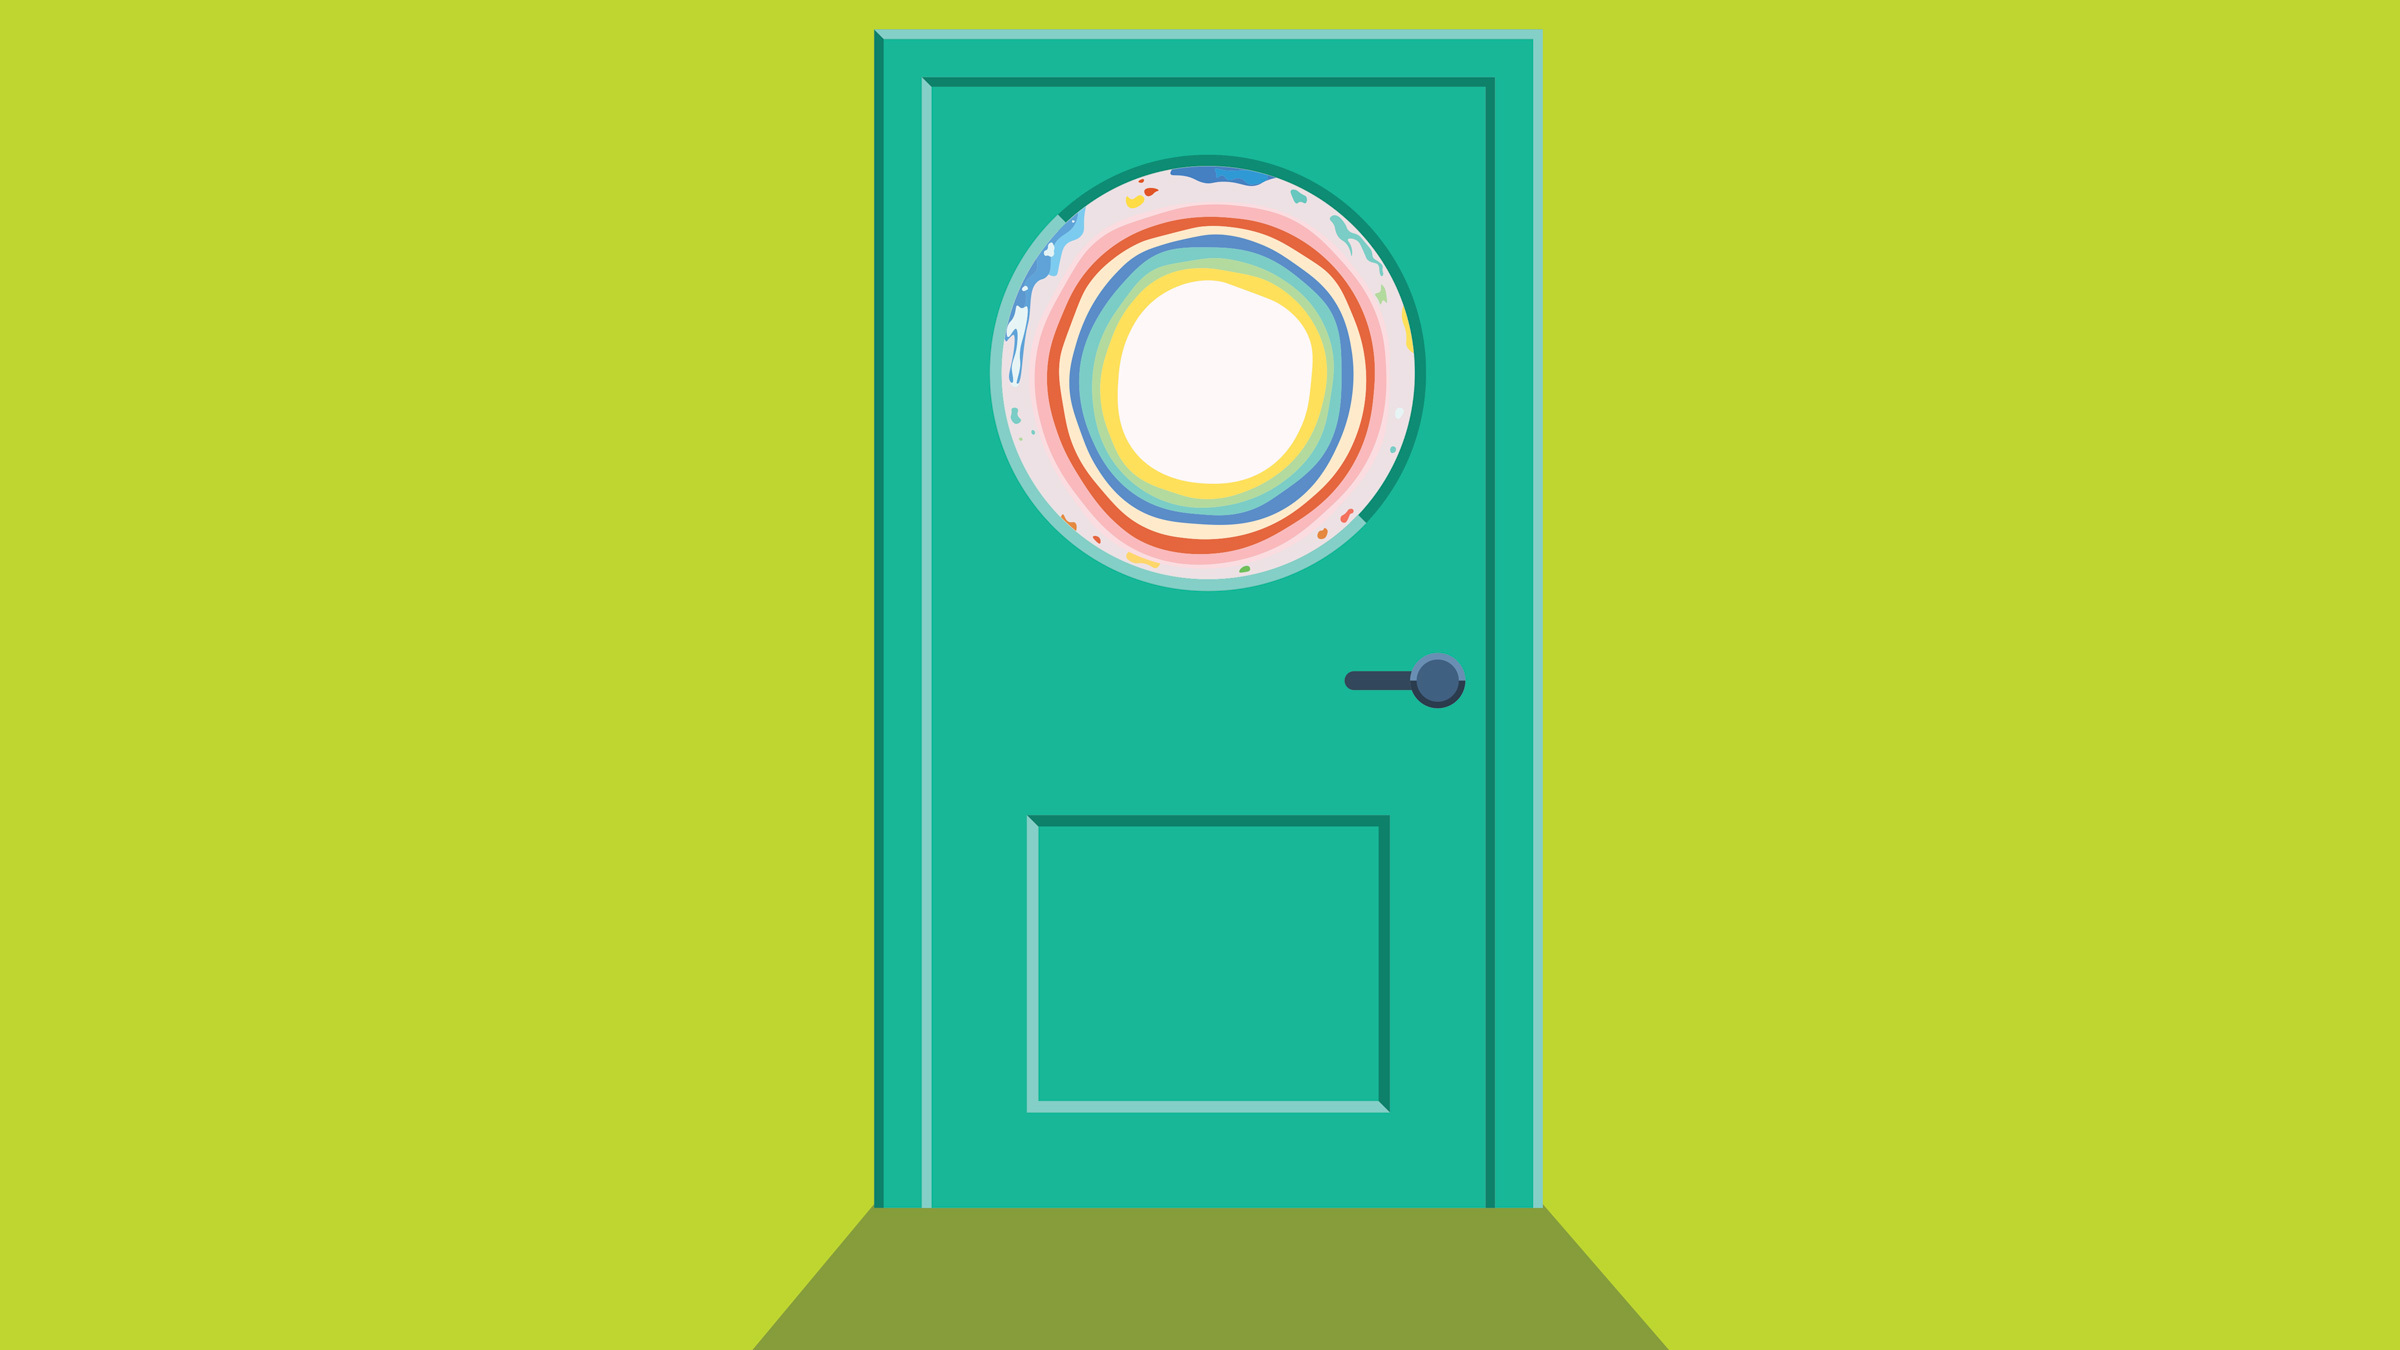 bright orb-like circle on a closed door, illustration